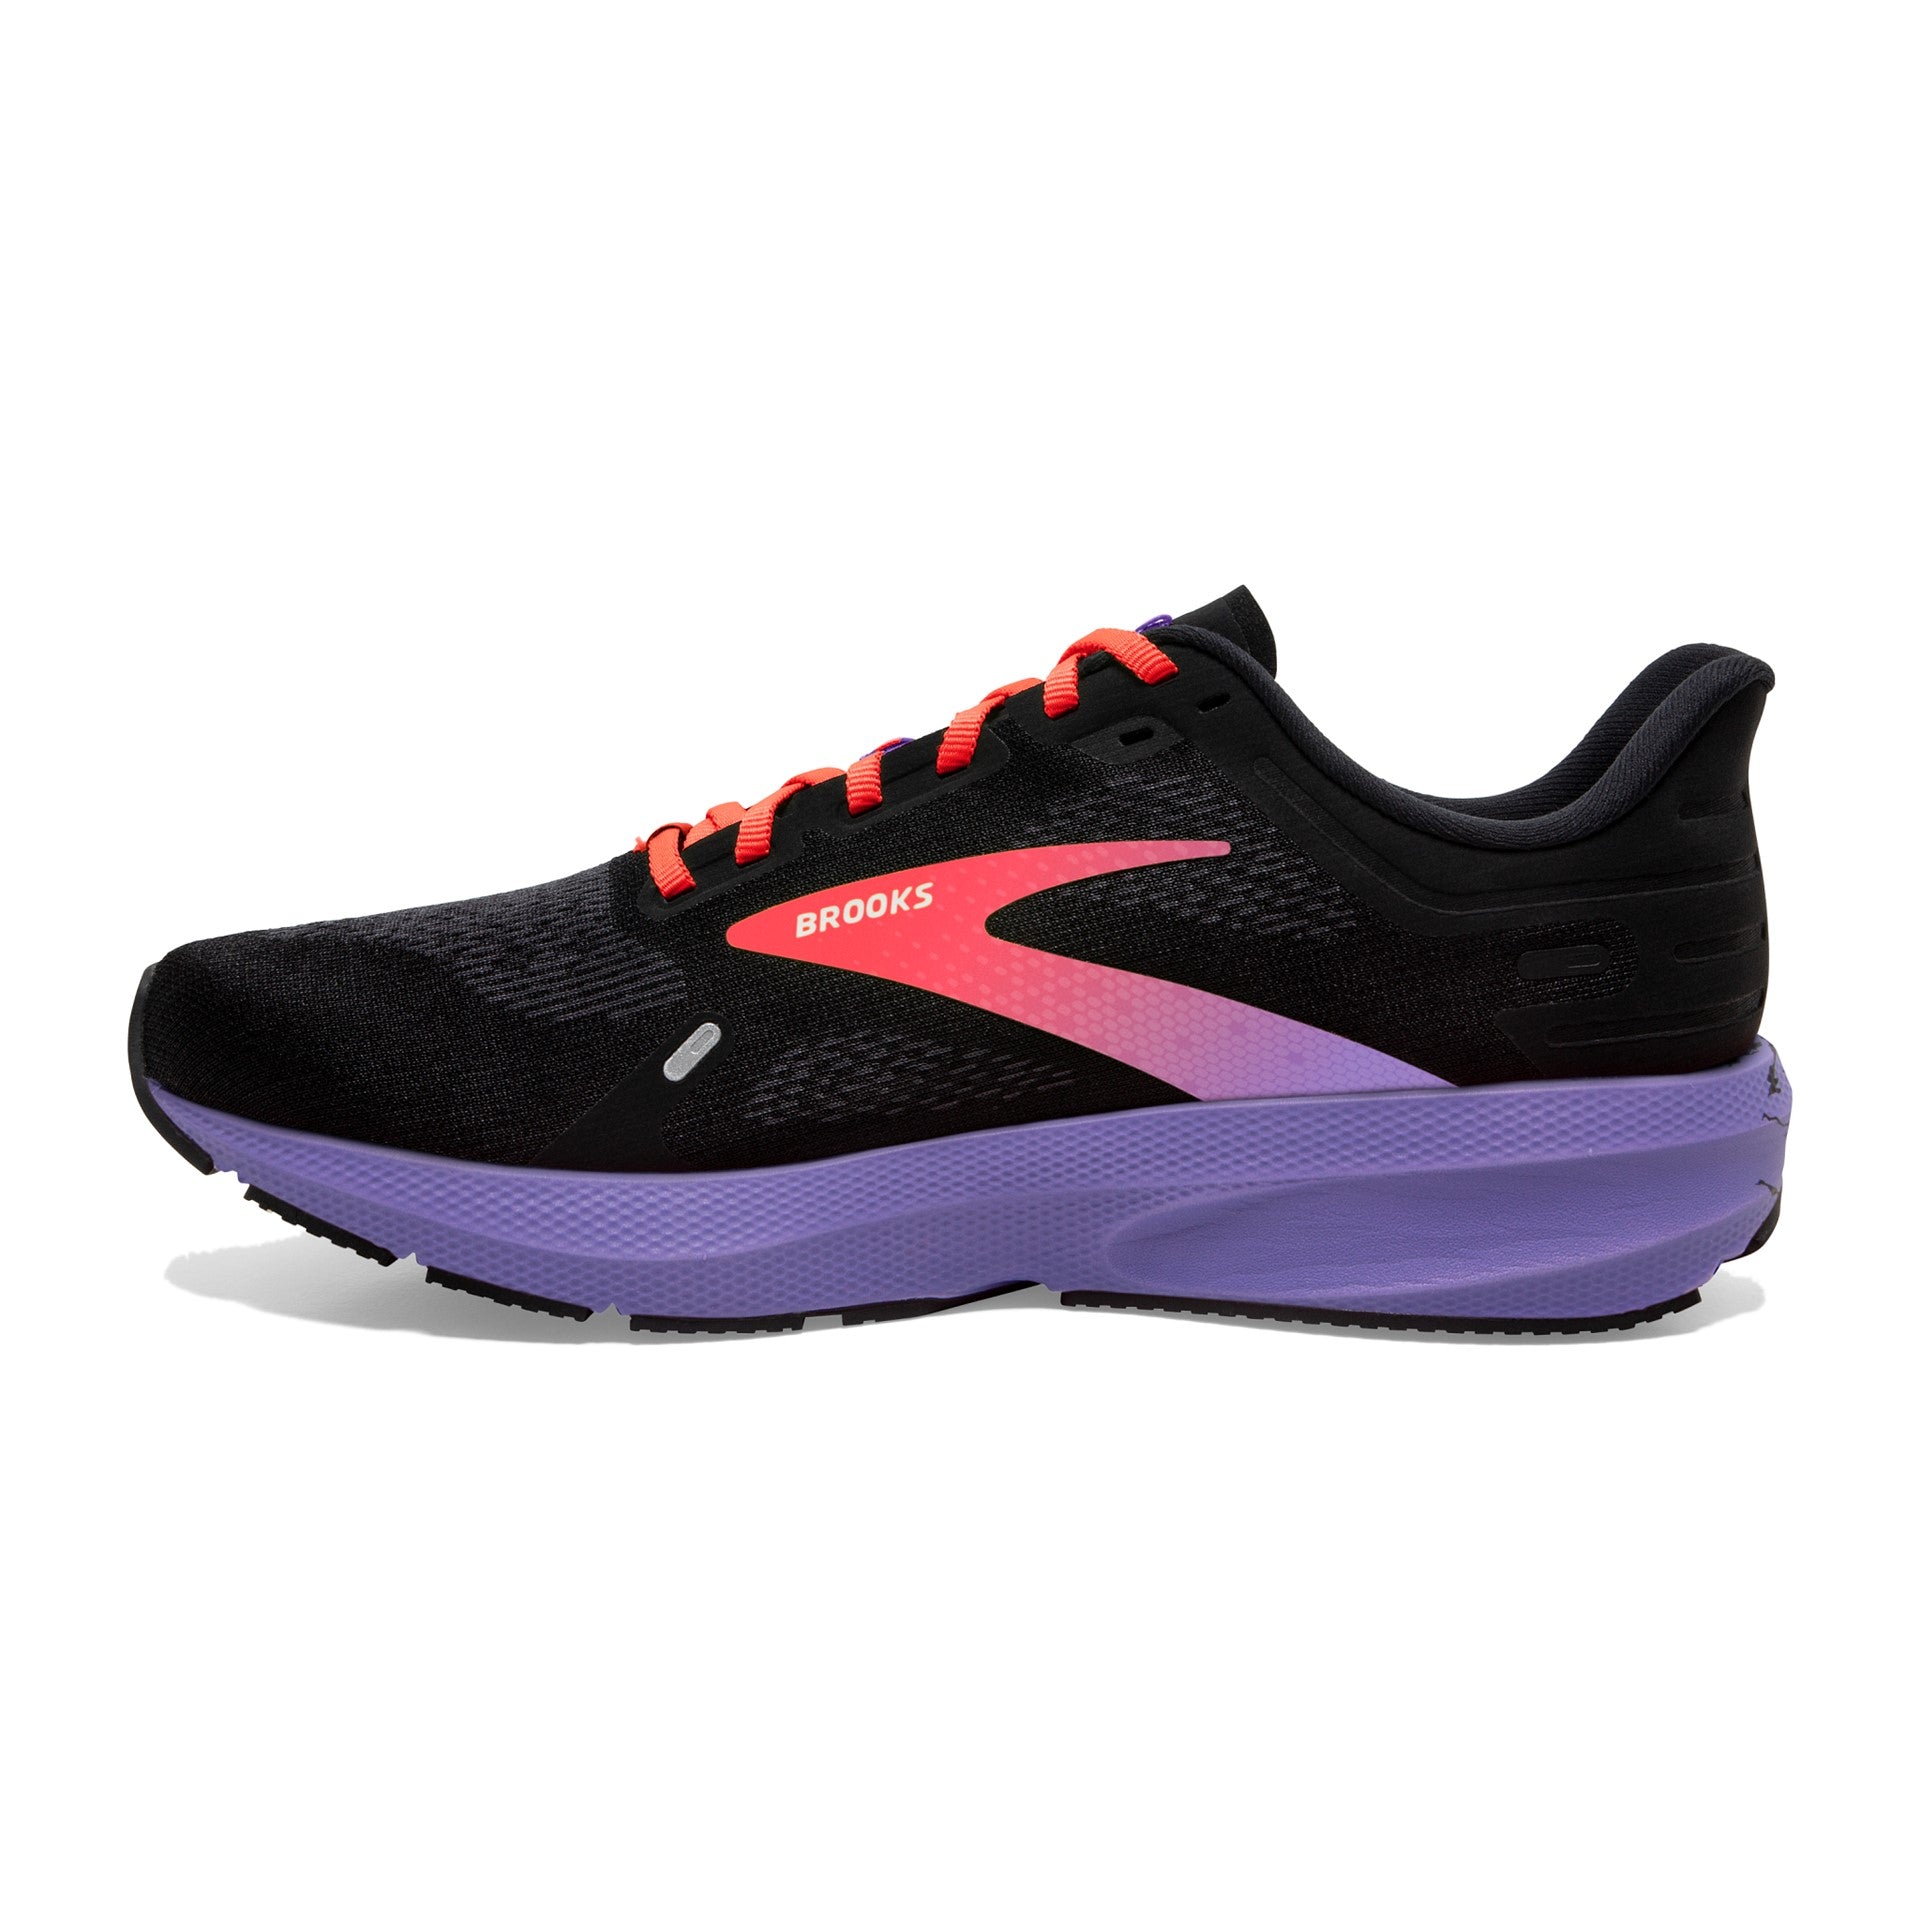 Brooks Launch 9 Running Shoes - Women's